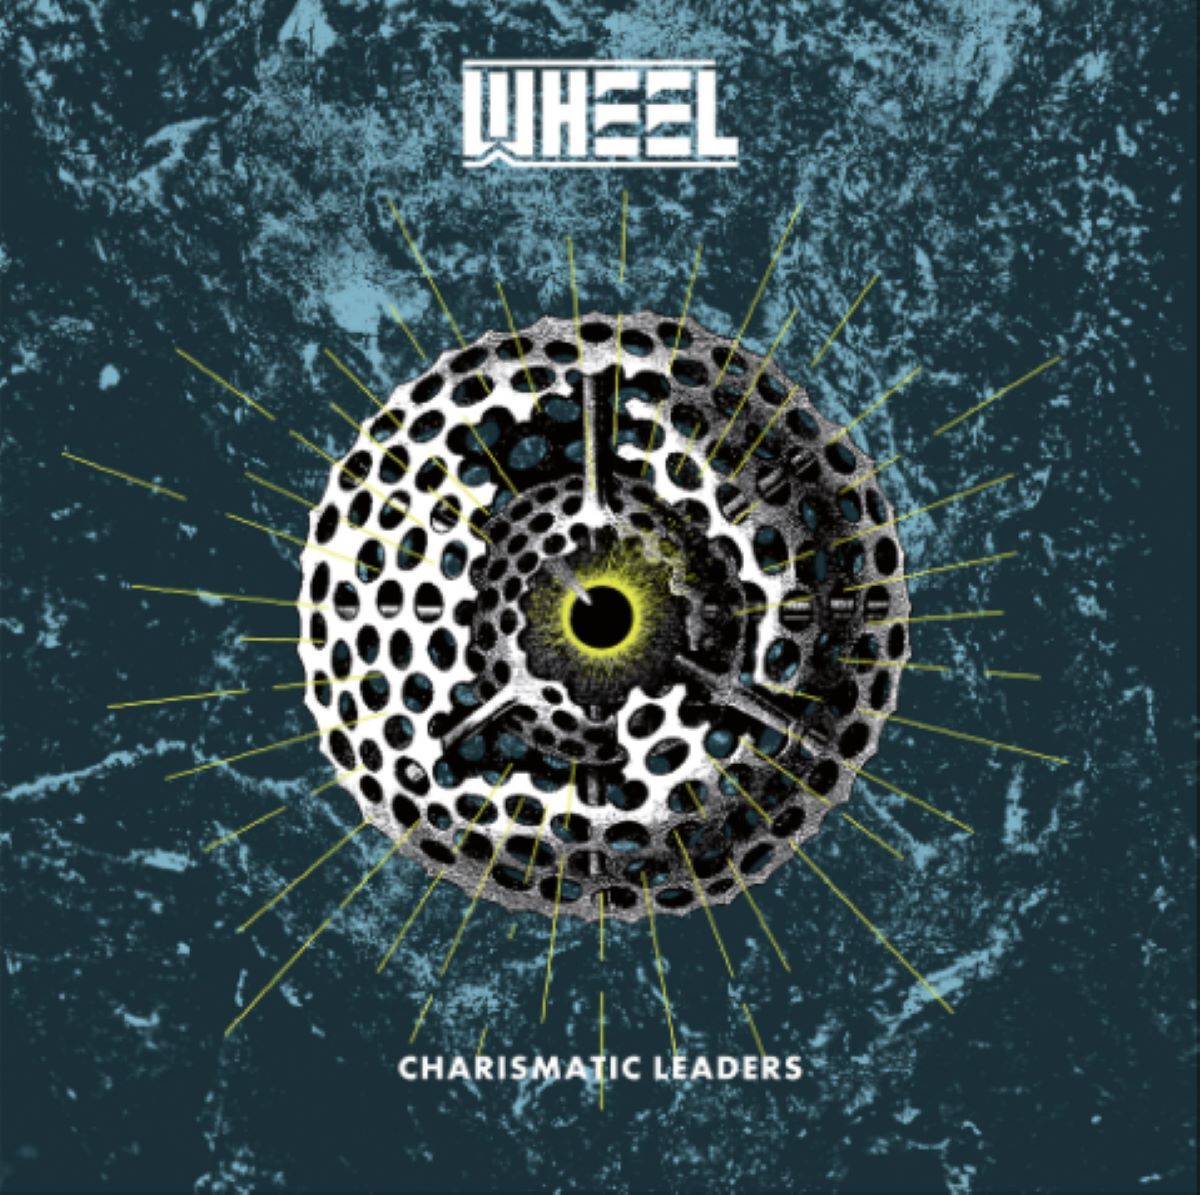 Charismatic leaders von Wheel - CD (Digipak, Limited Edition)